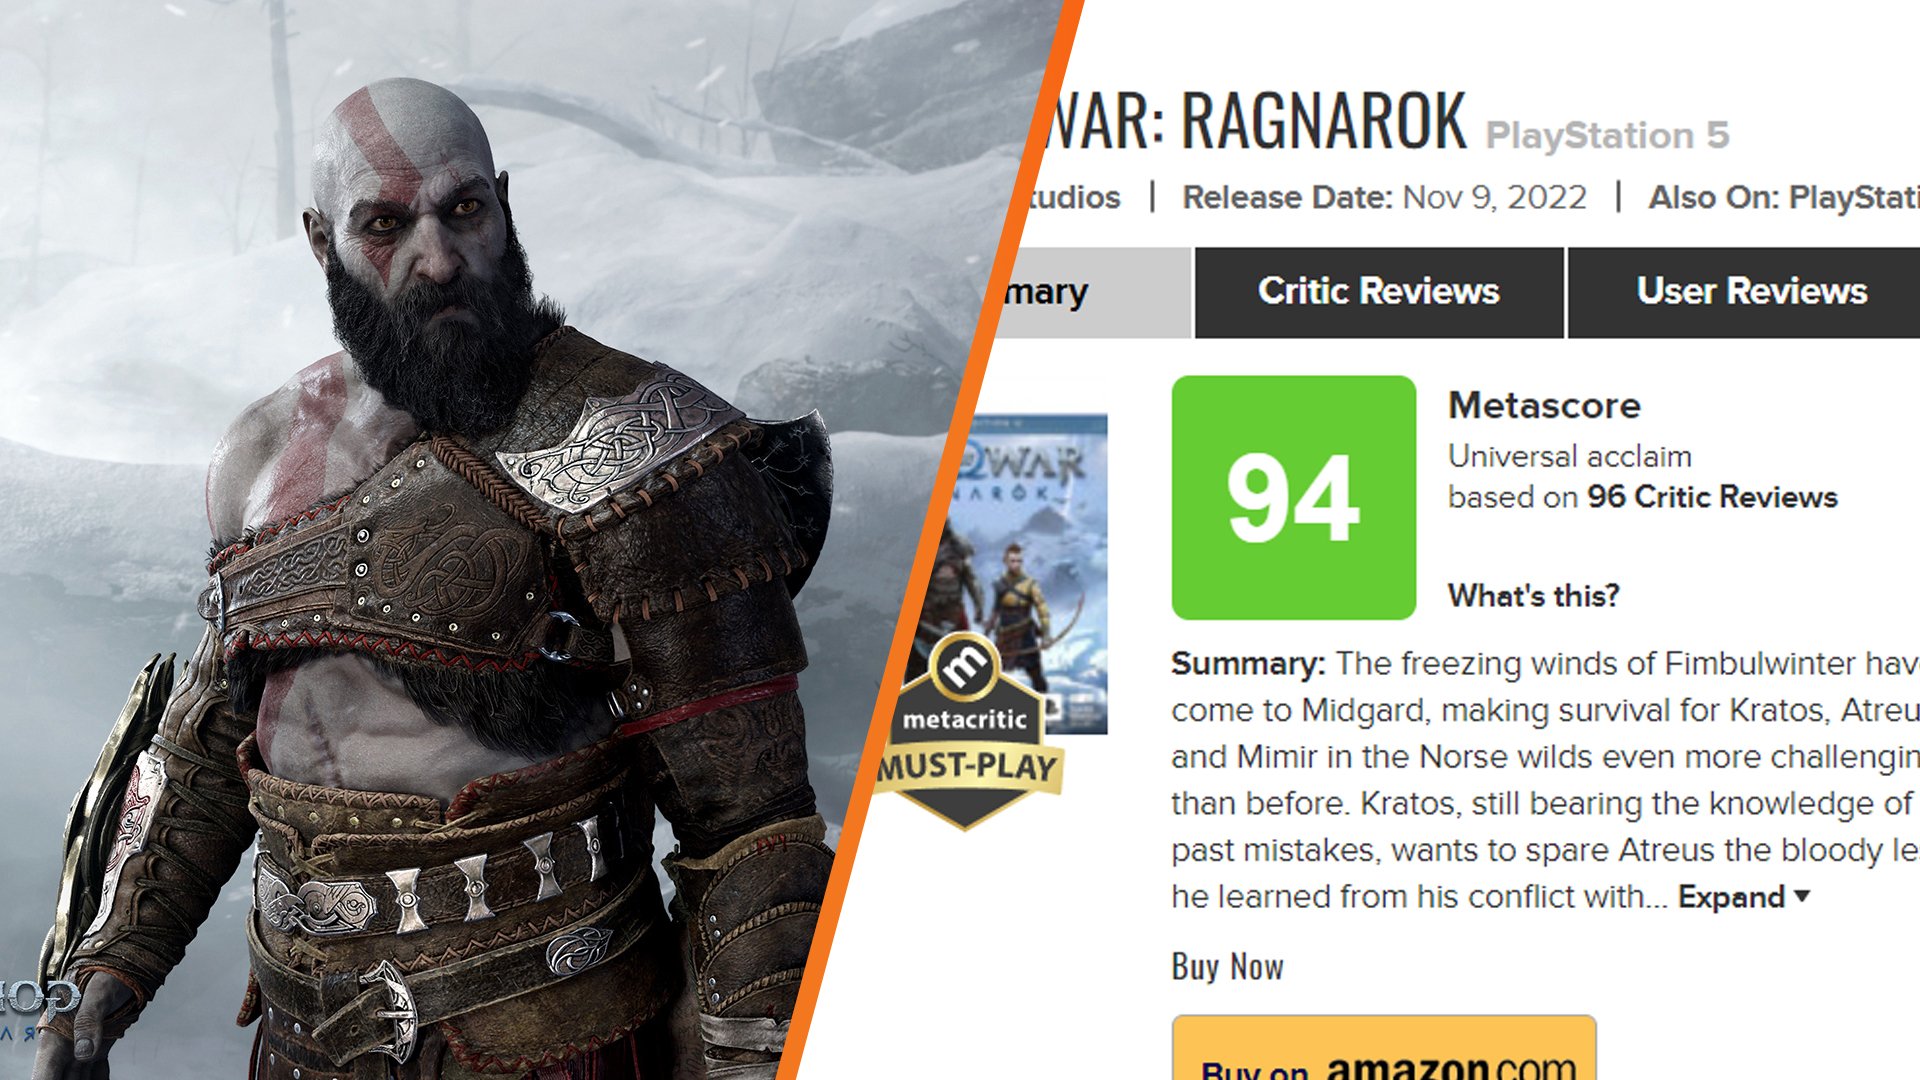 God of War Ragnarok Collector's Edition Contents Leak Online